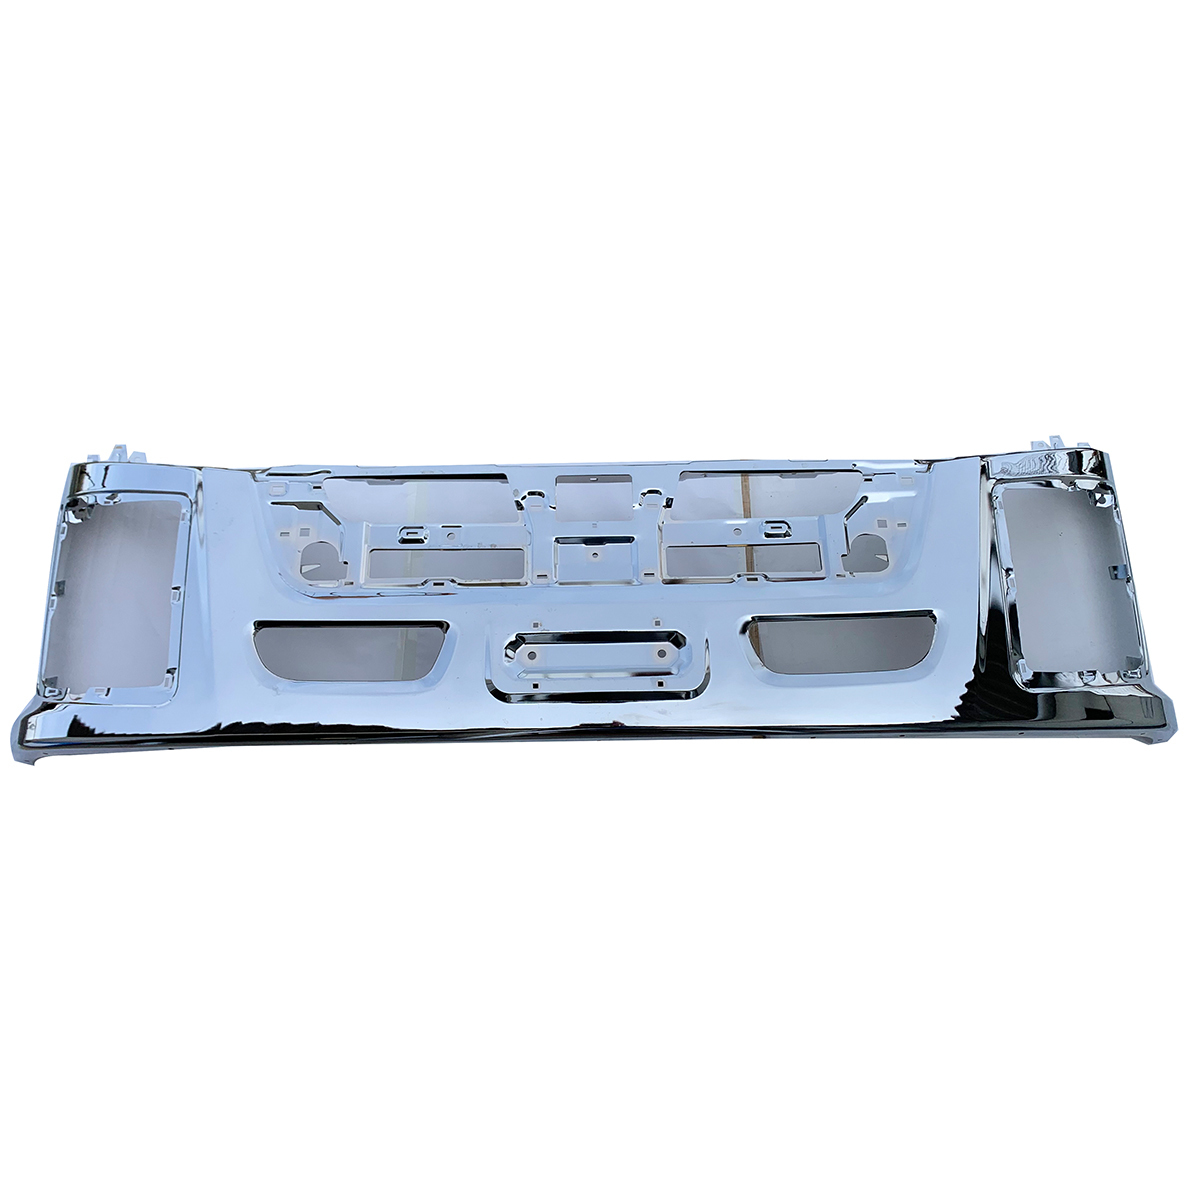  Isuzu large fai booster Giga plating front bumper & head light cover & inner grill 